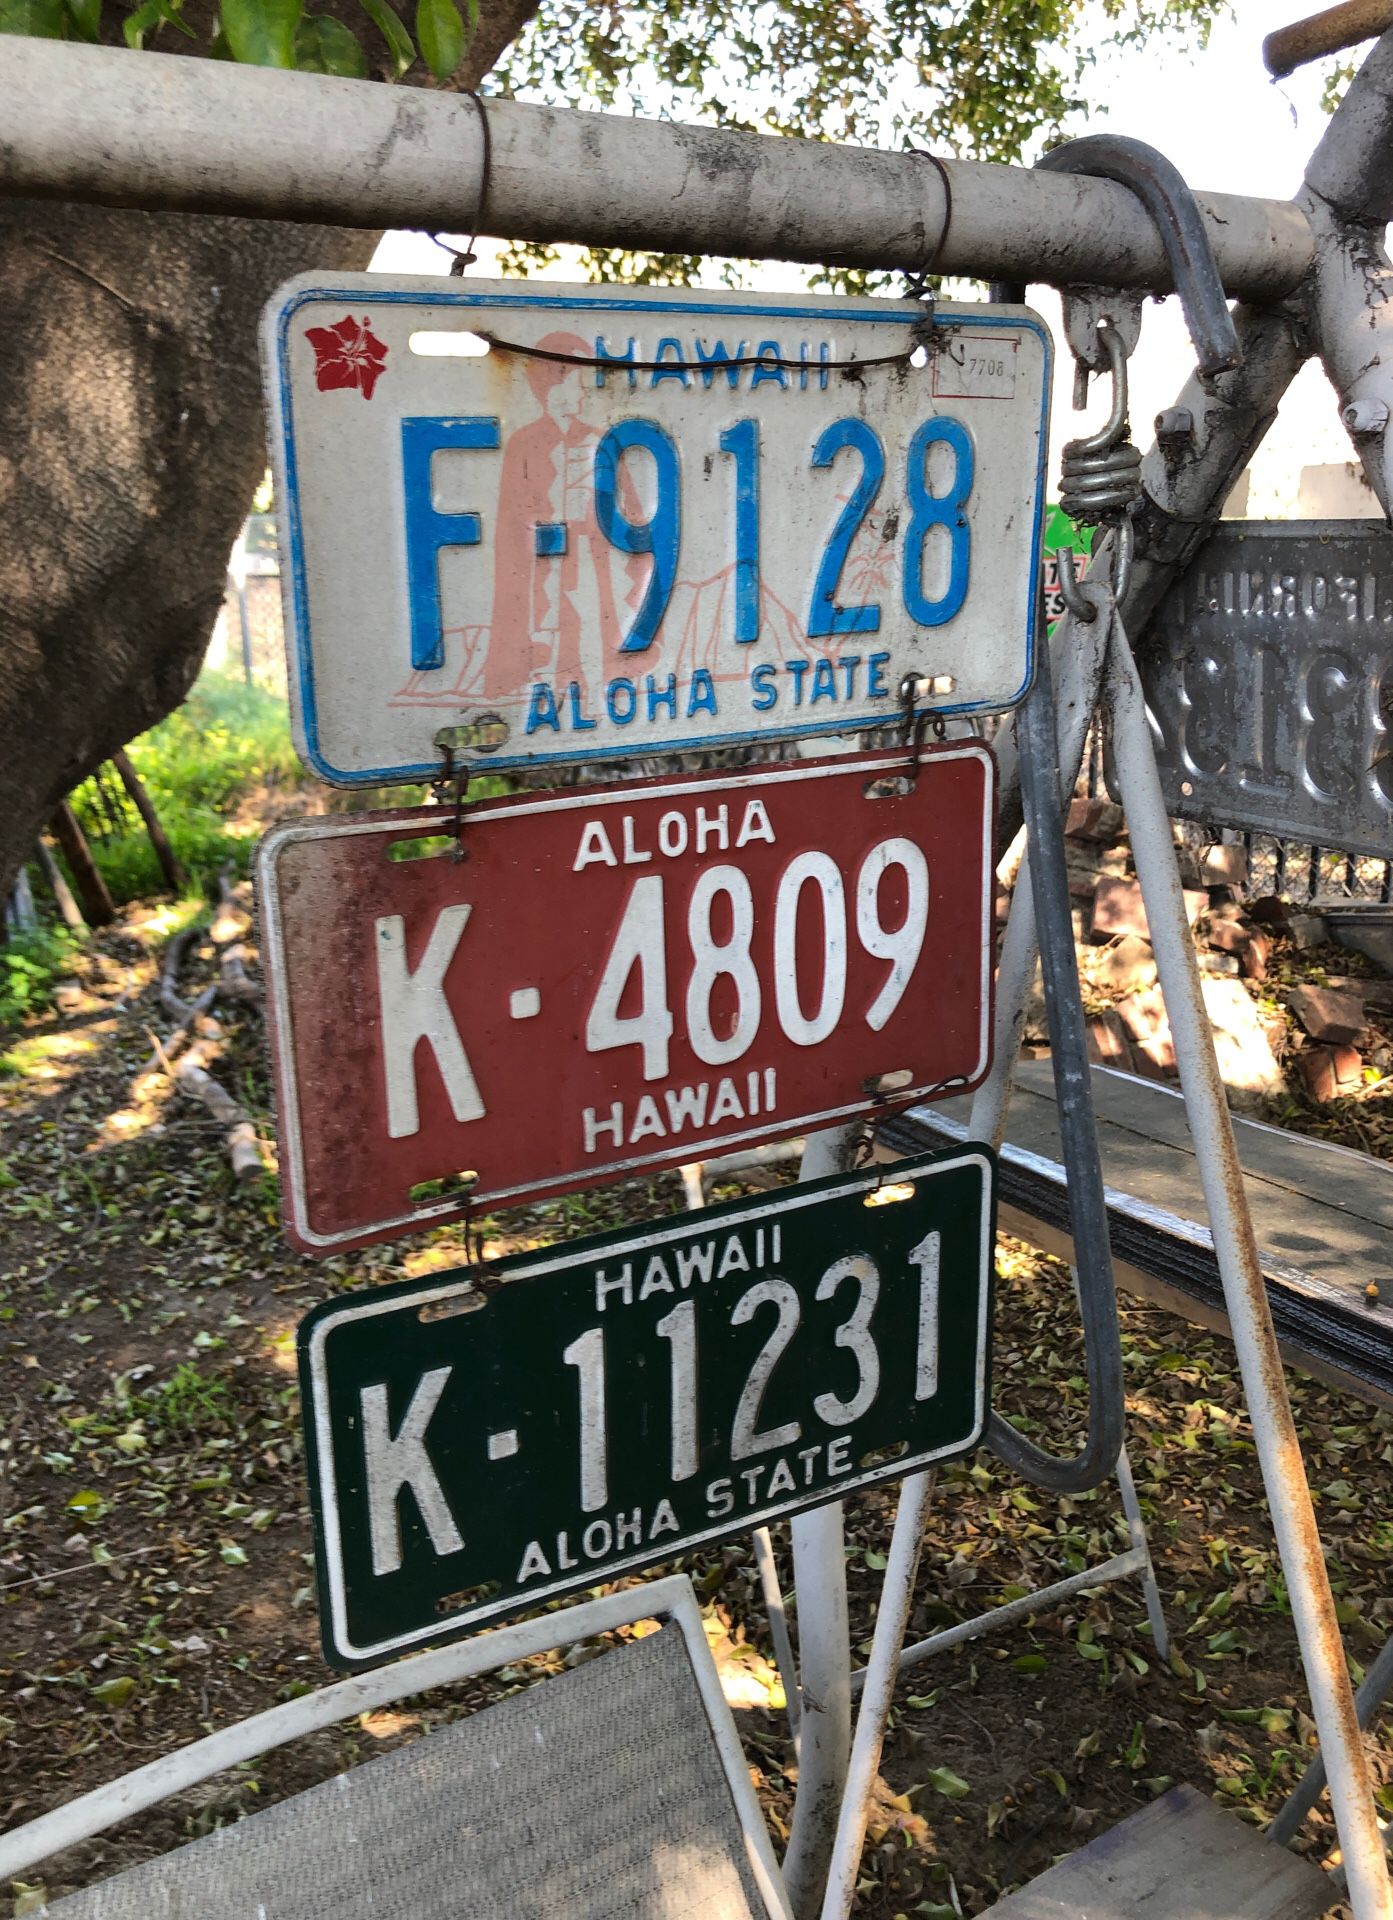 Hawaii license plates, set of three plates